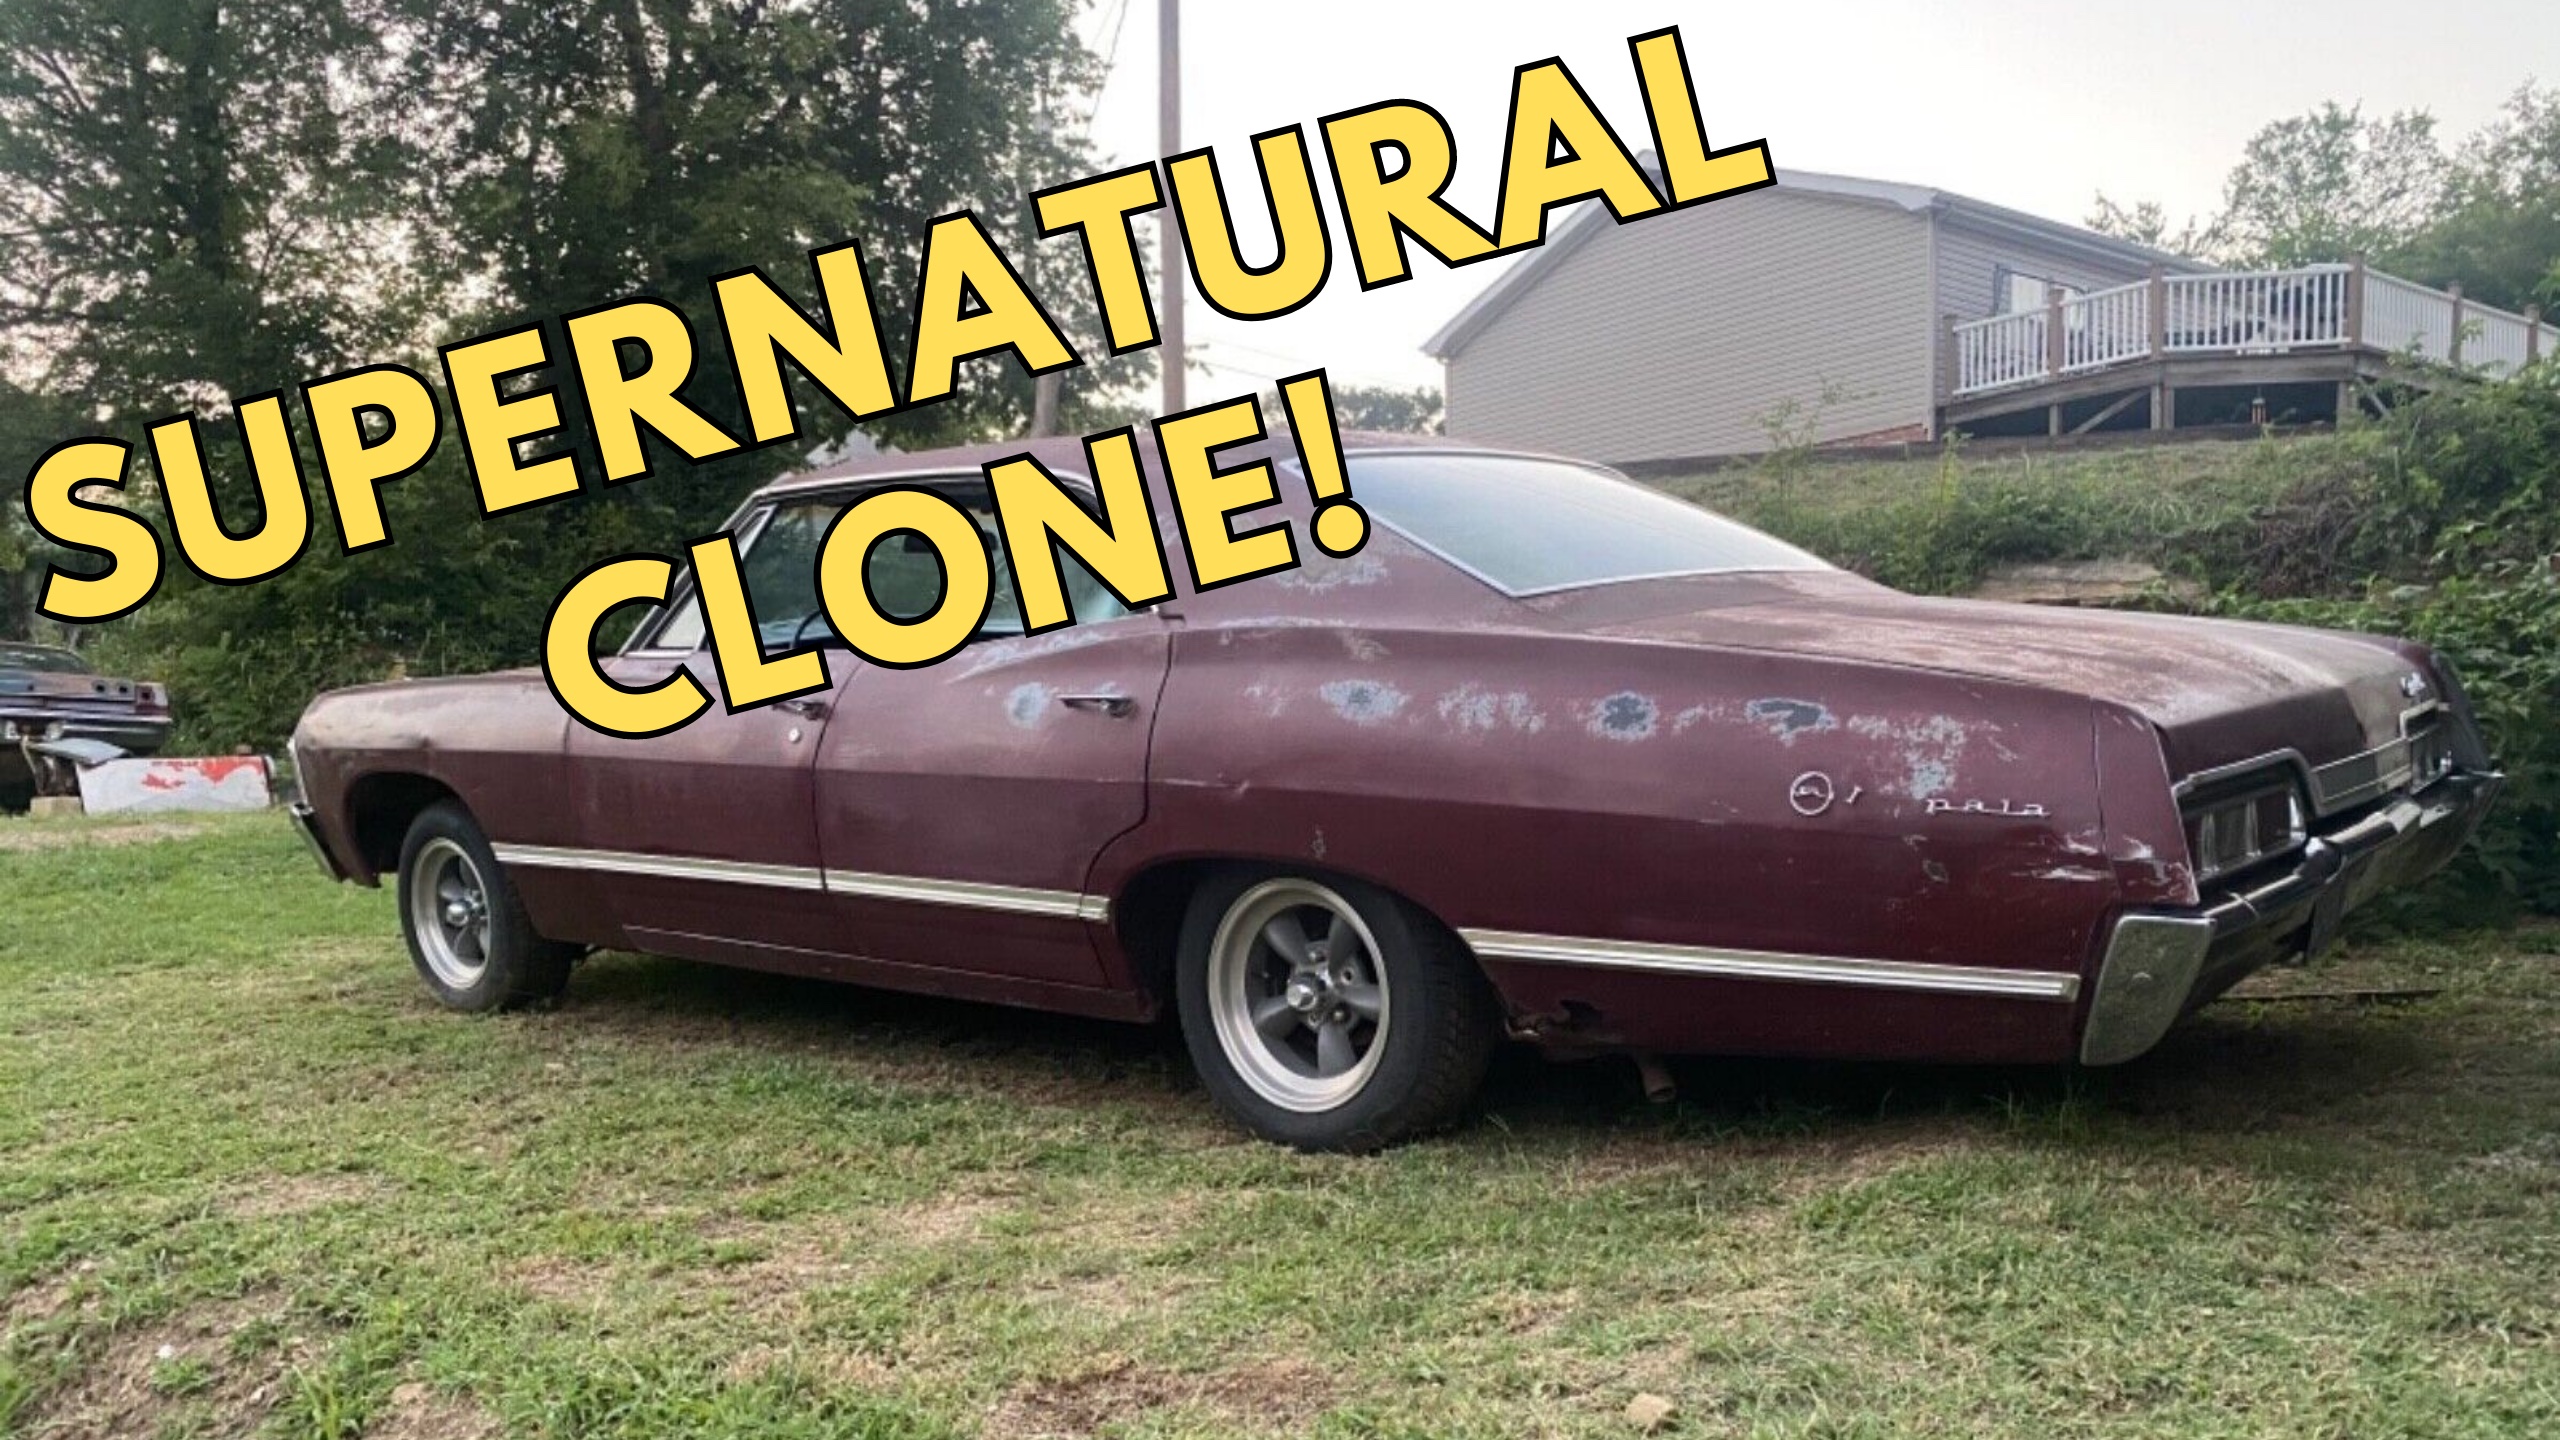 Unrestored 1967 Chevrolet Impala Supernatural Found in a